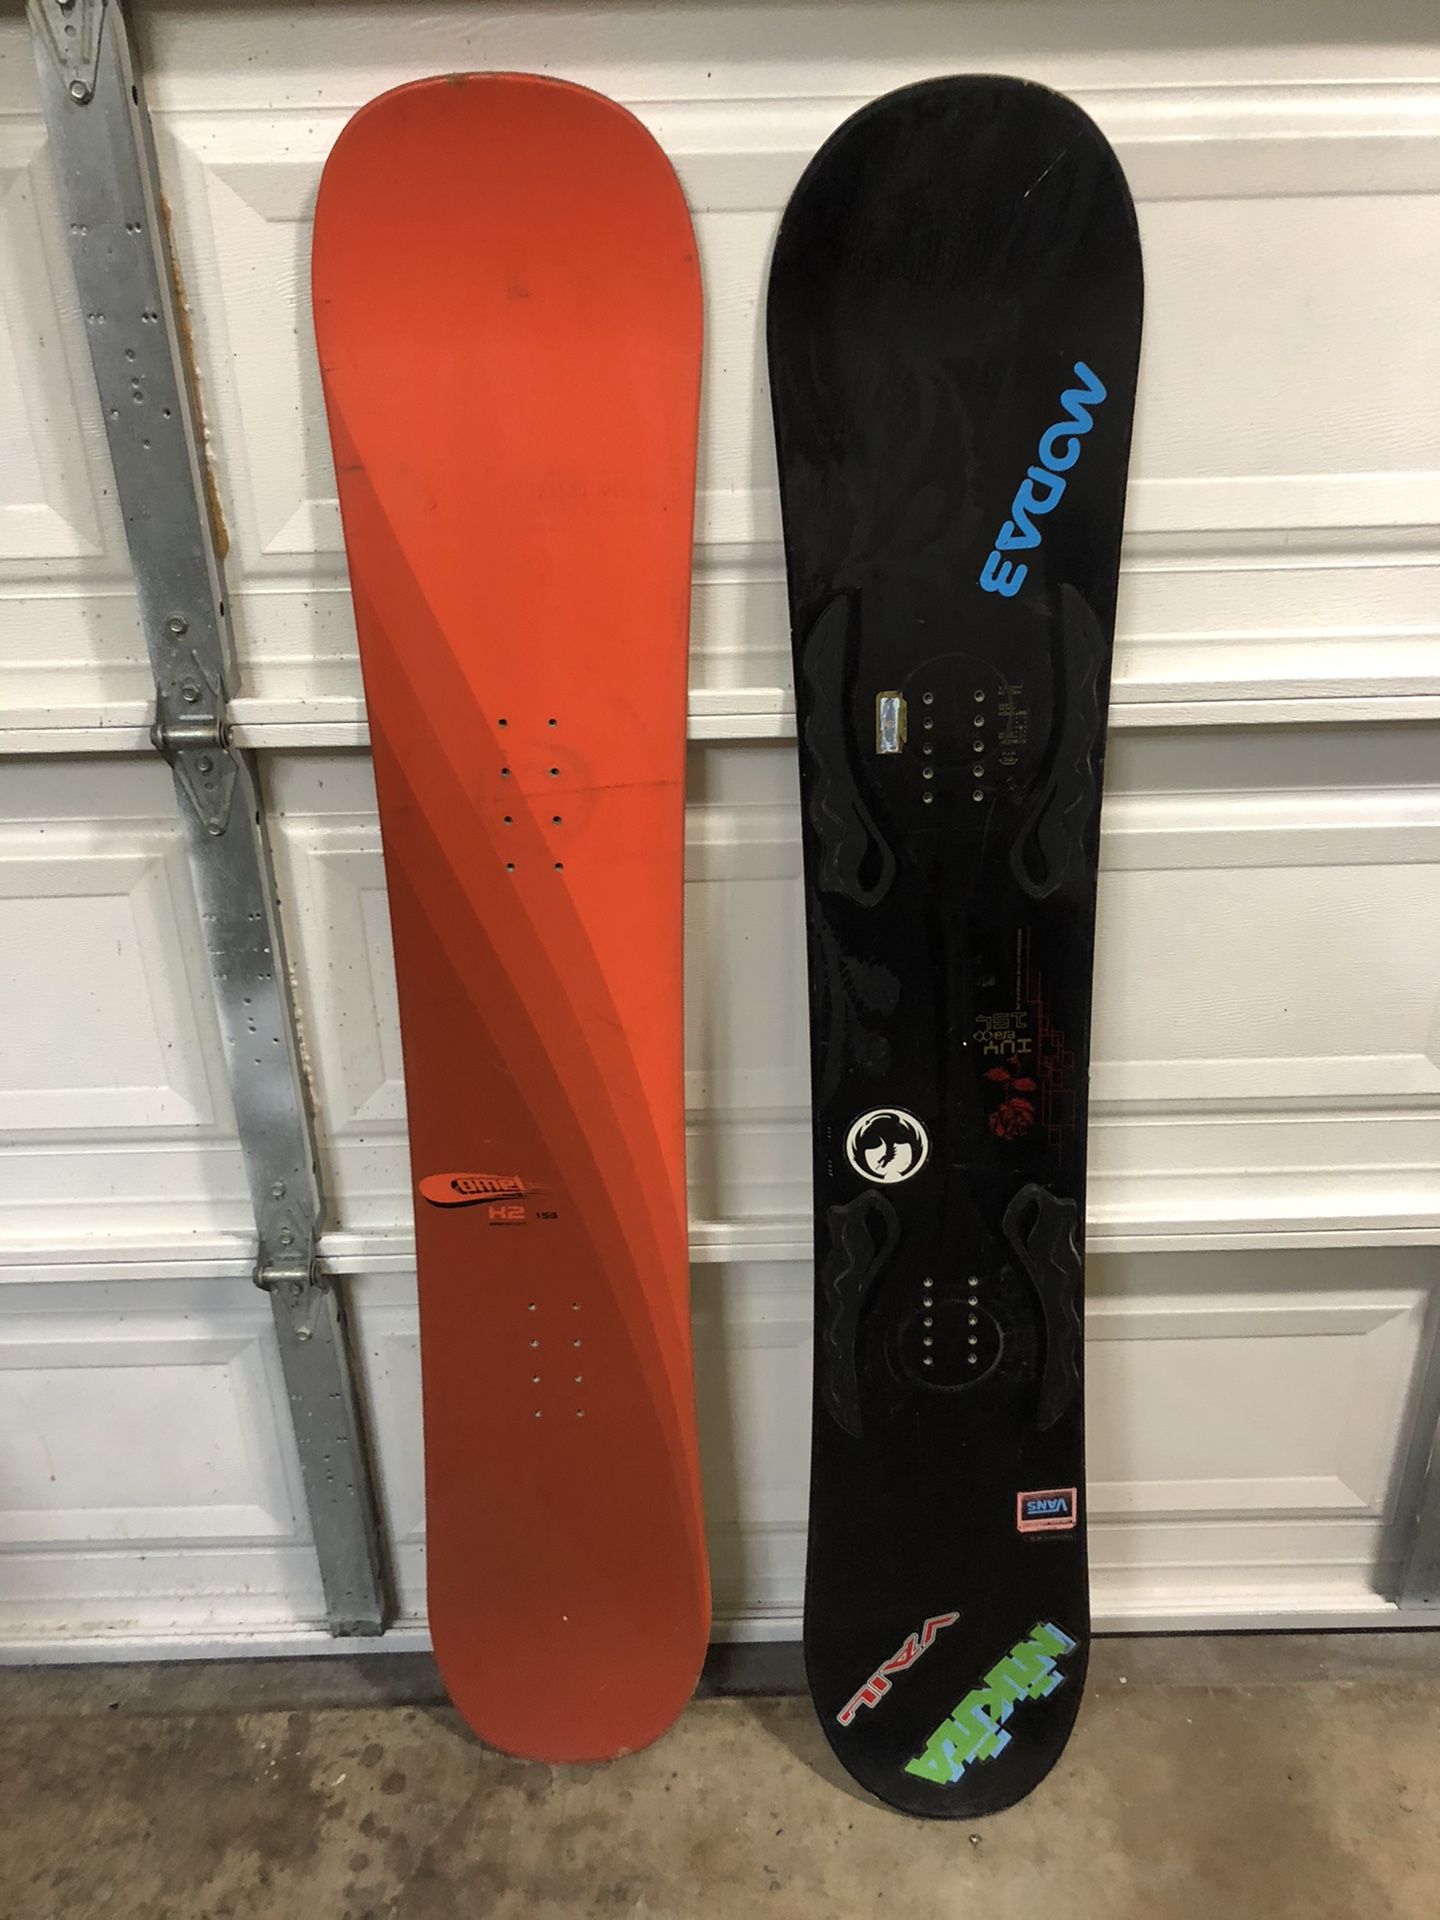 Snow boards